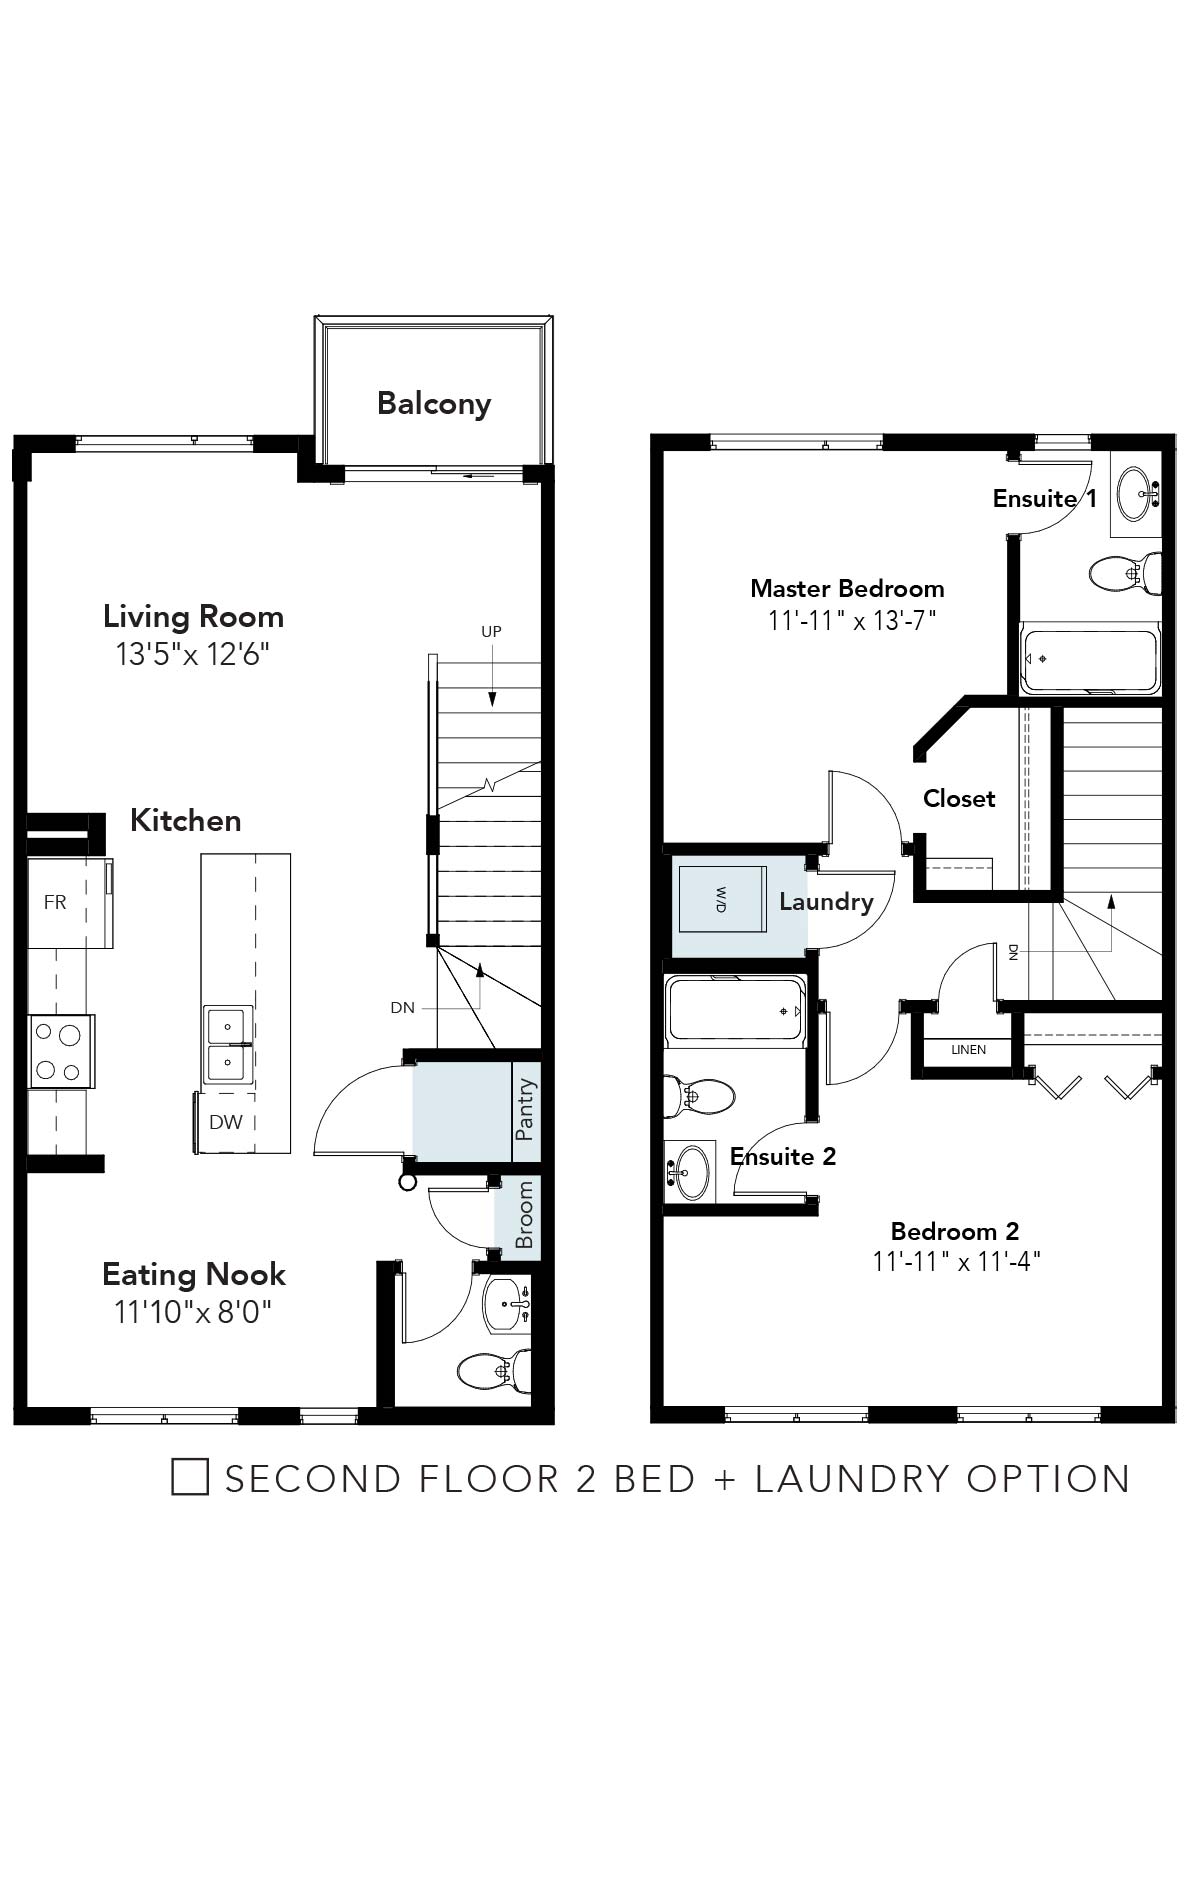 Emerson Second Floor 2 Bedroom + Laundry Option